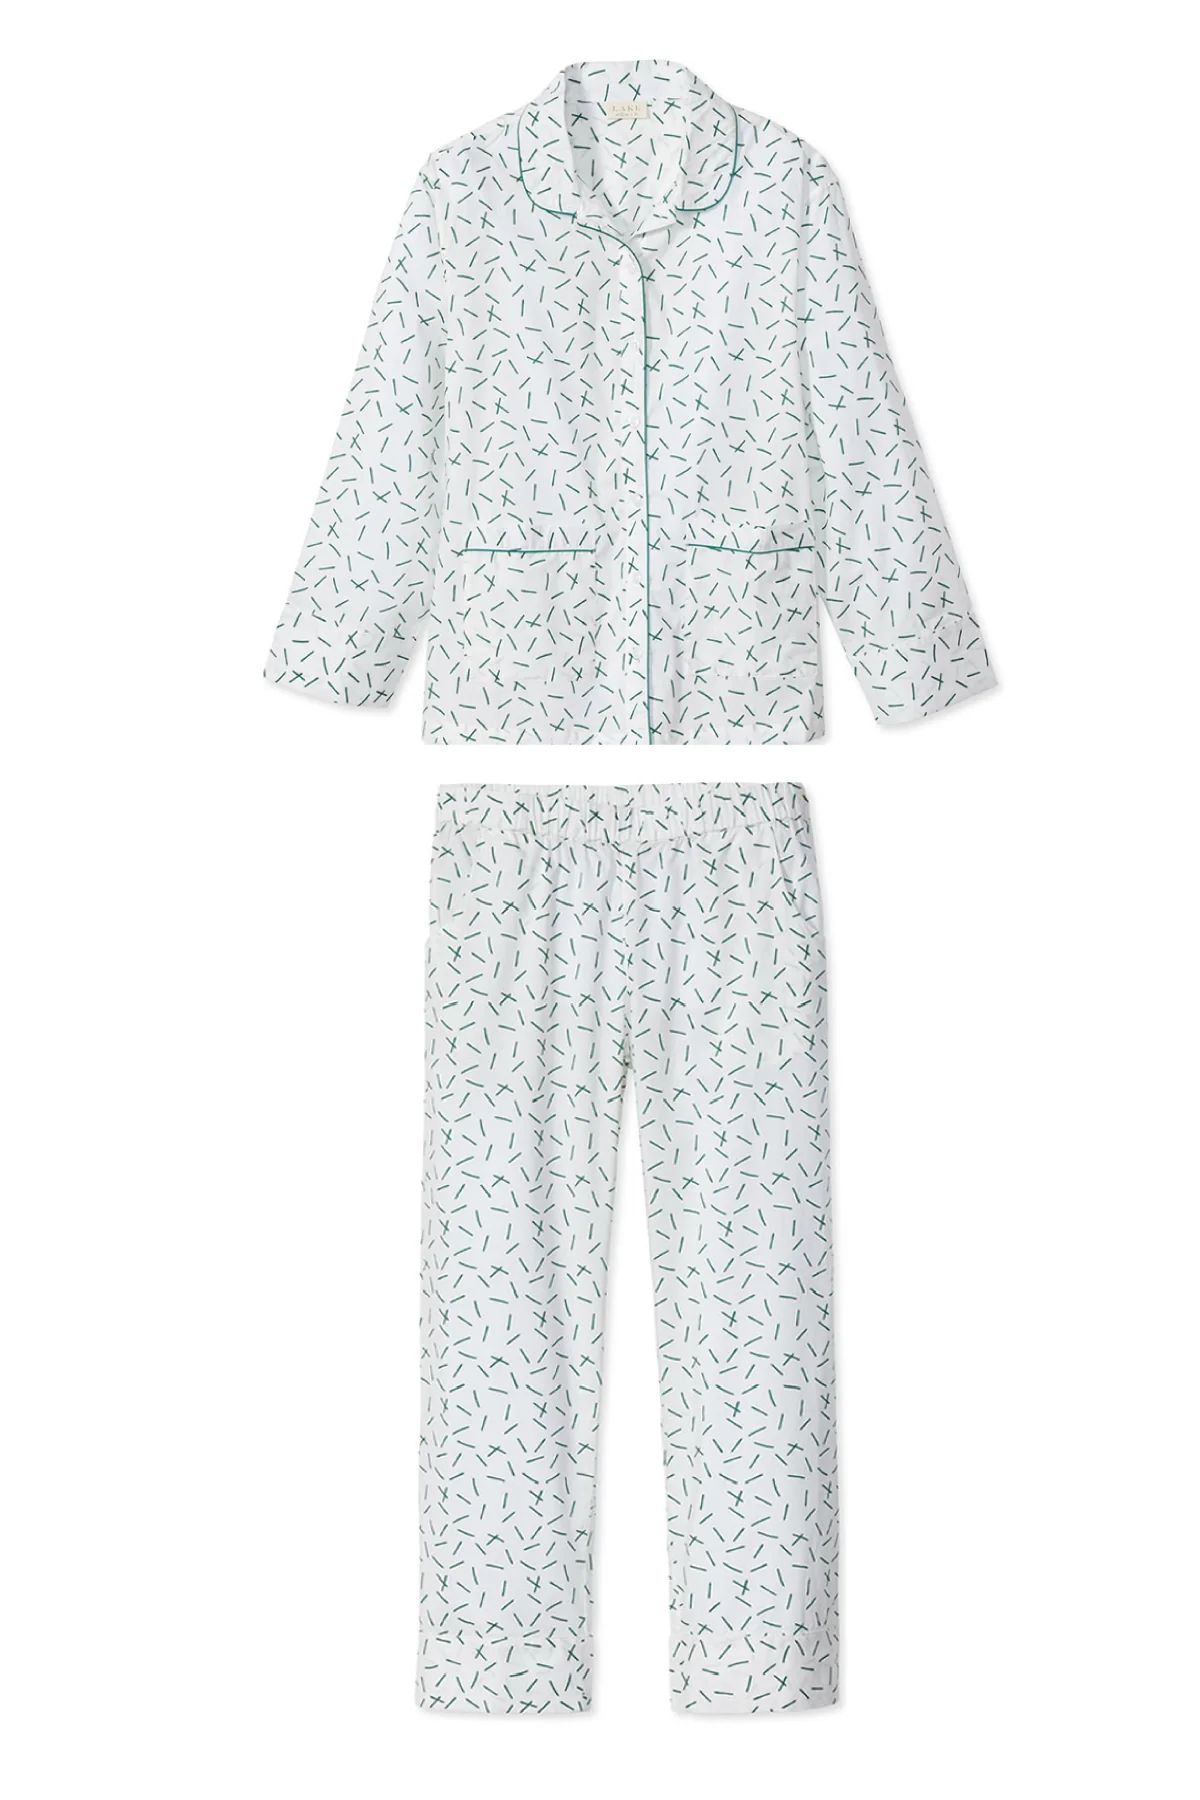 Poplin Pants Set in Hedge | LAKE Pajamas